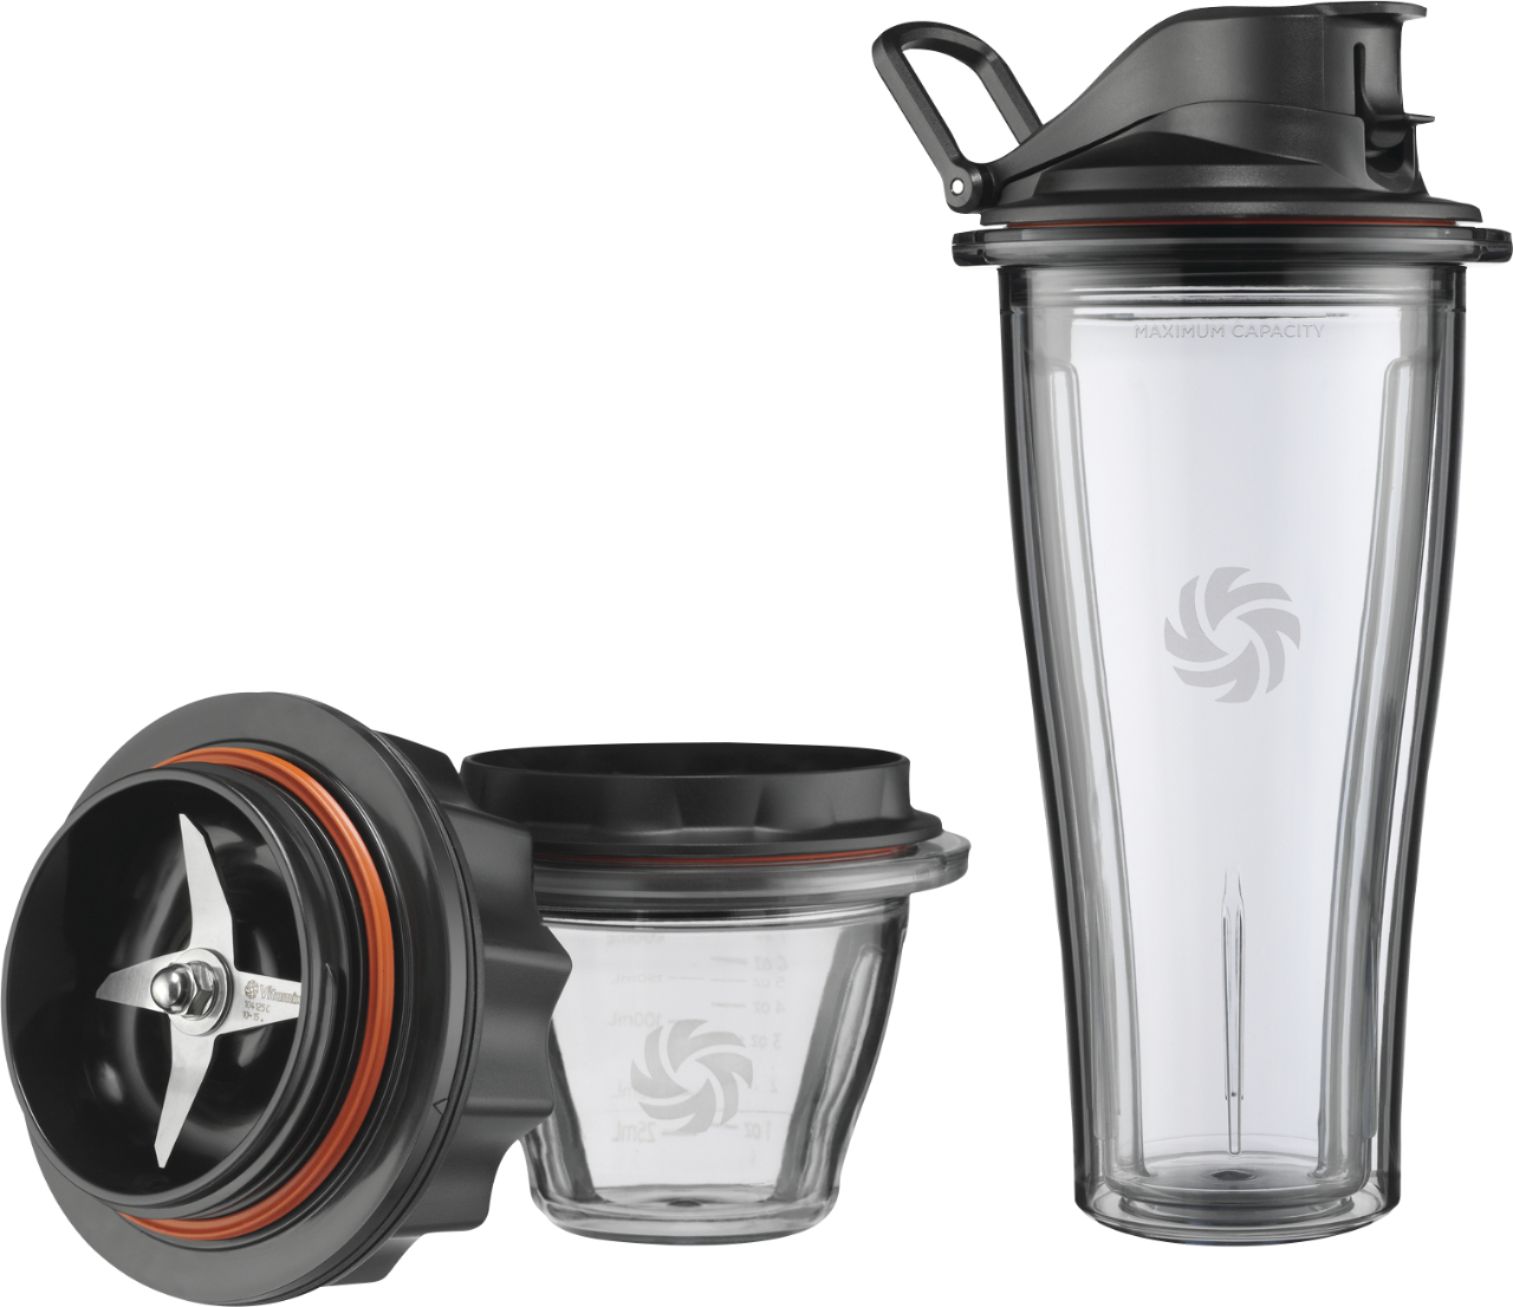 Vitamix Ascent Blending Cup and Bowl Starter Kit